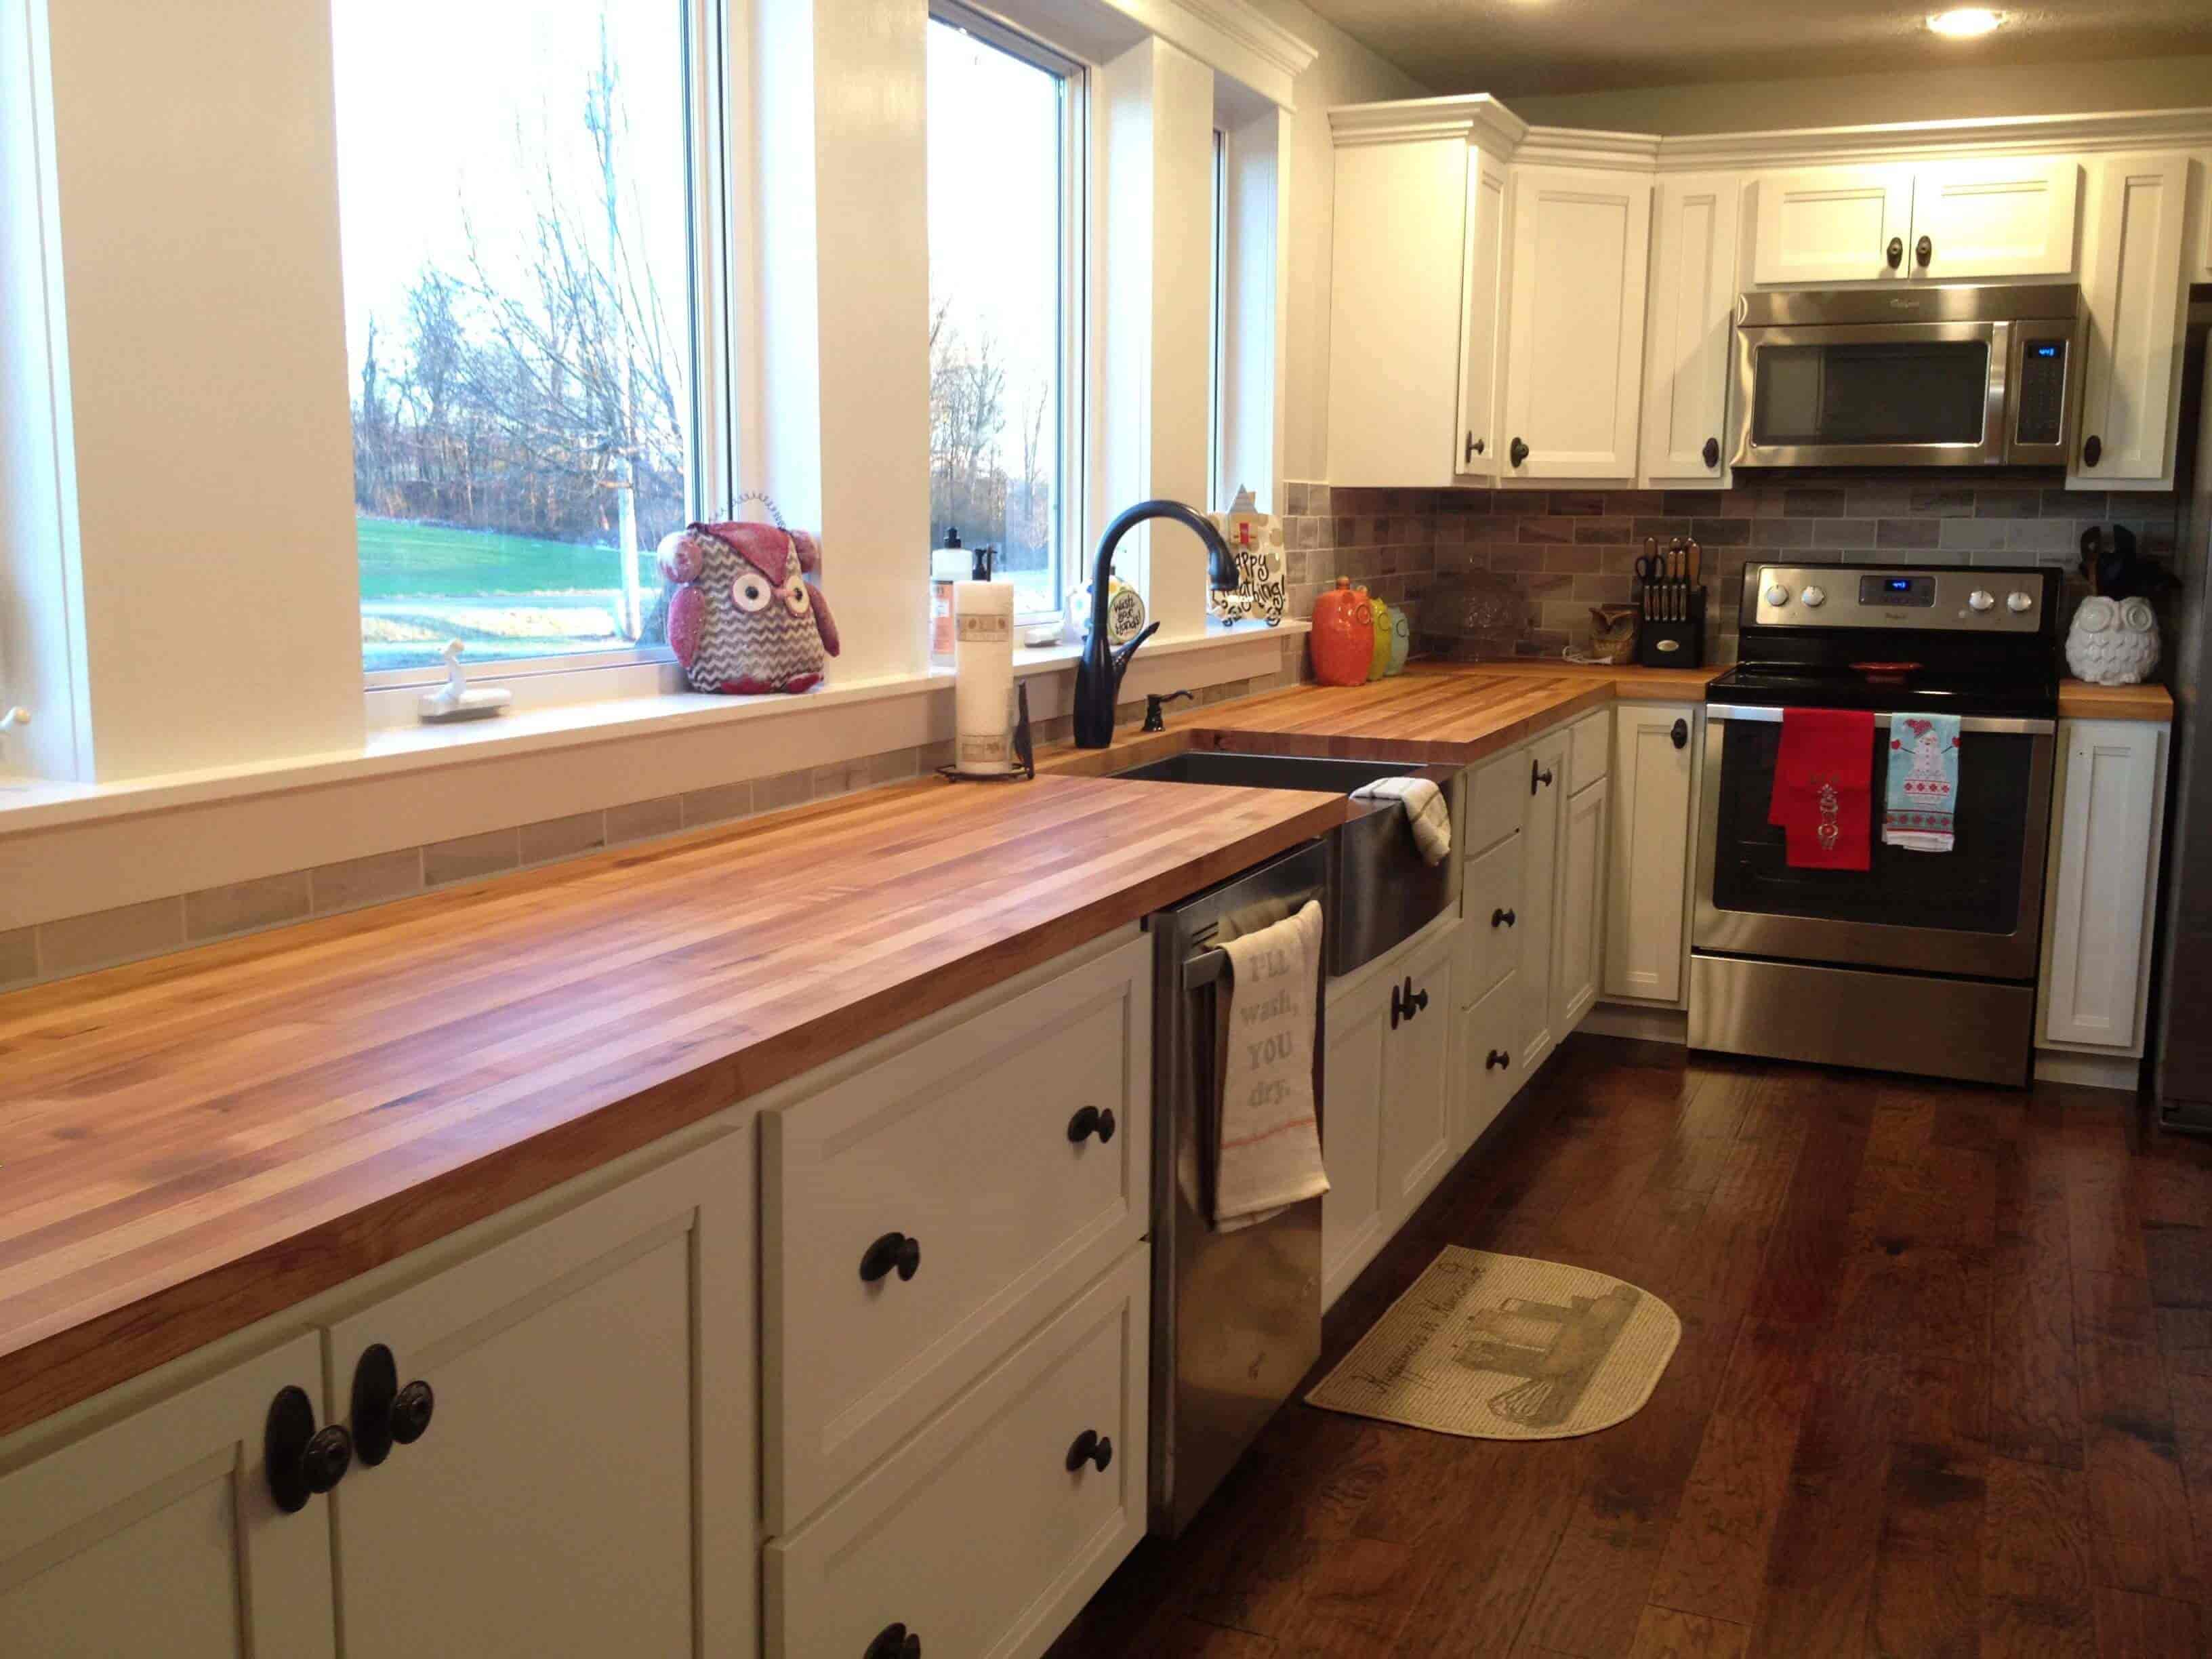 Use modern wooden countertops 